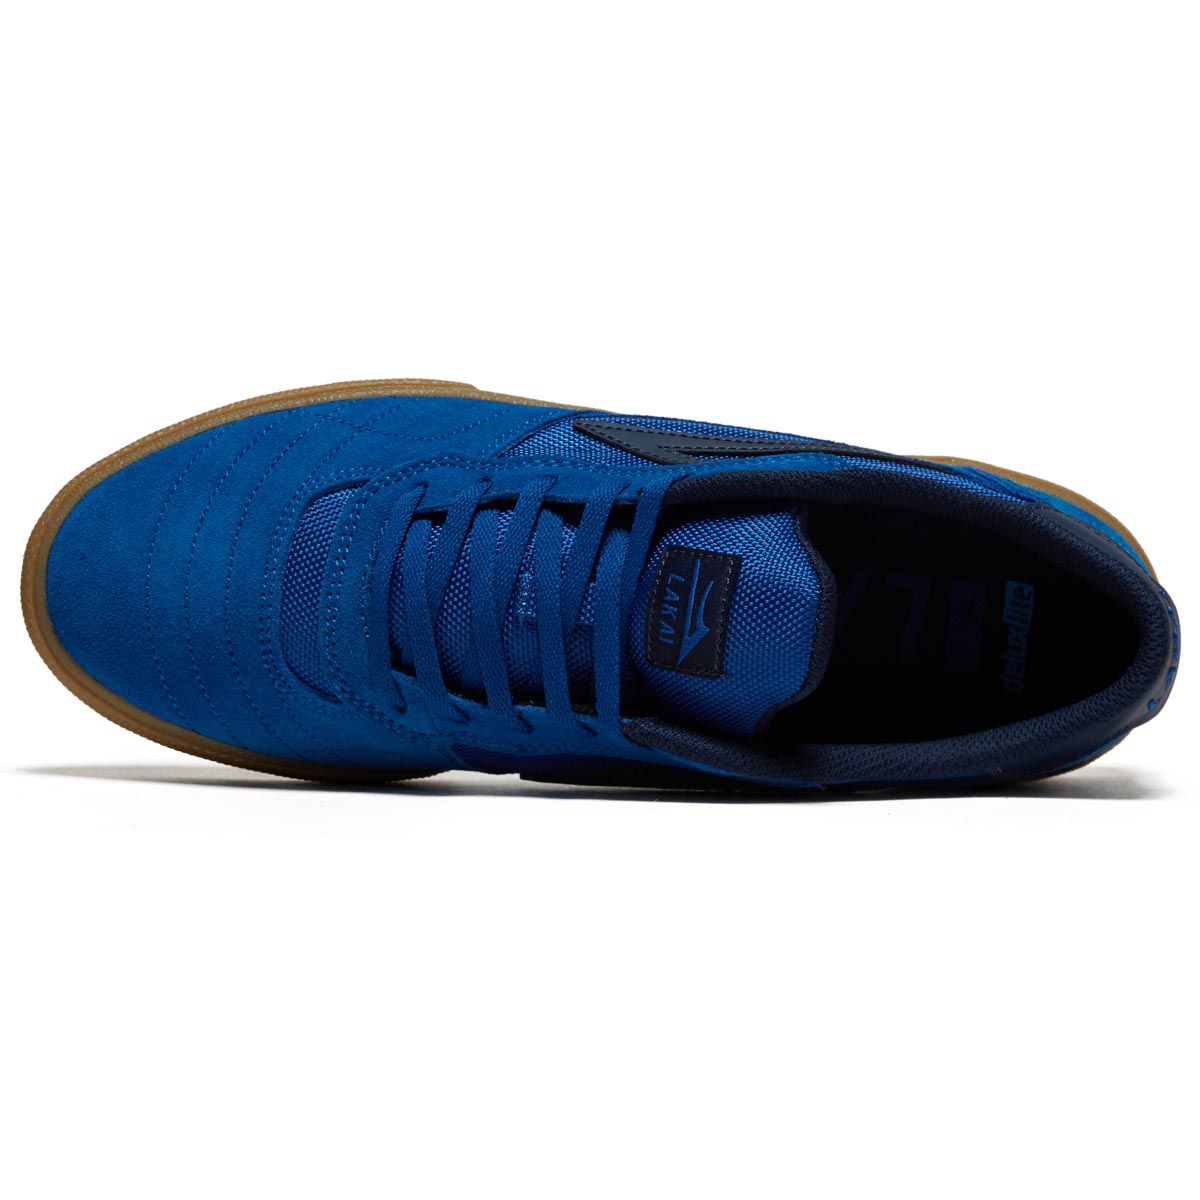 Lakai Cambridge Shoes - Blue/Gum image 3